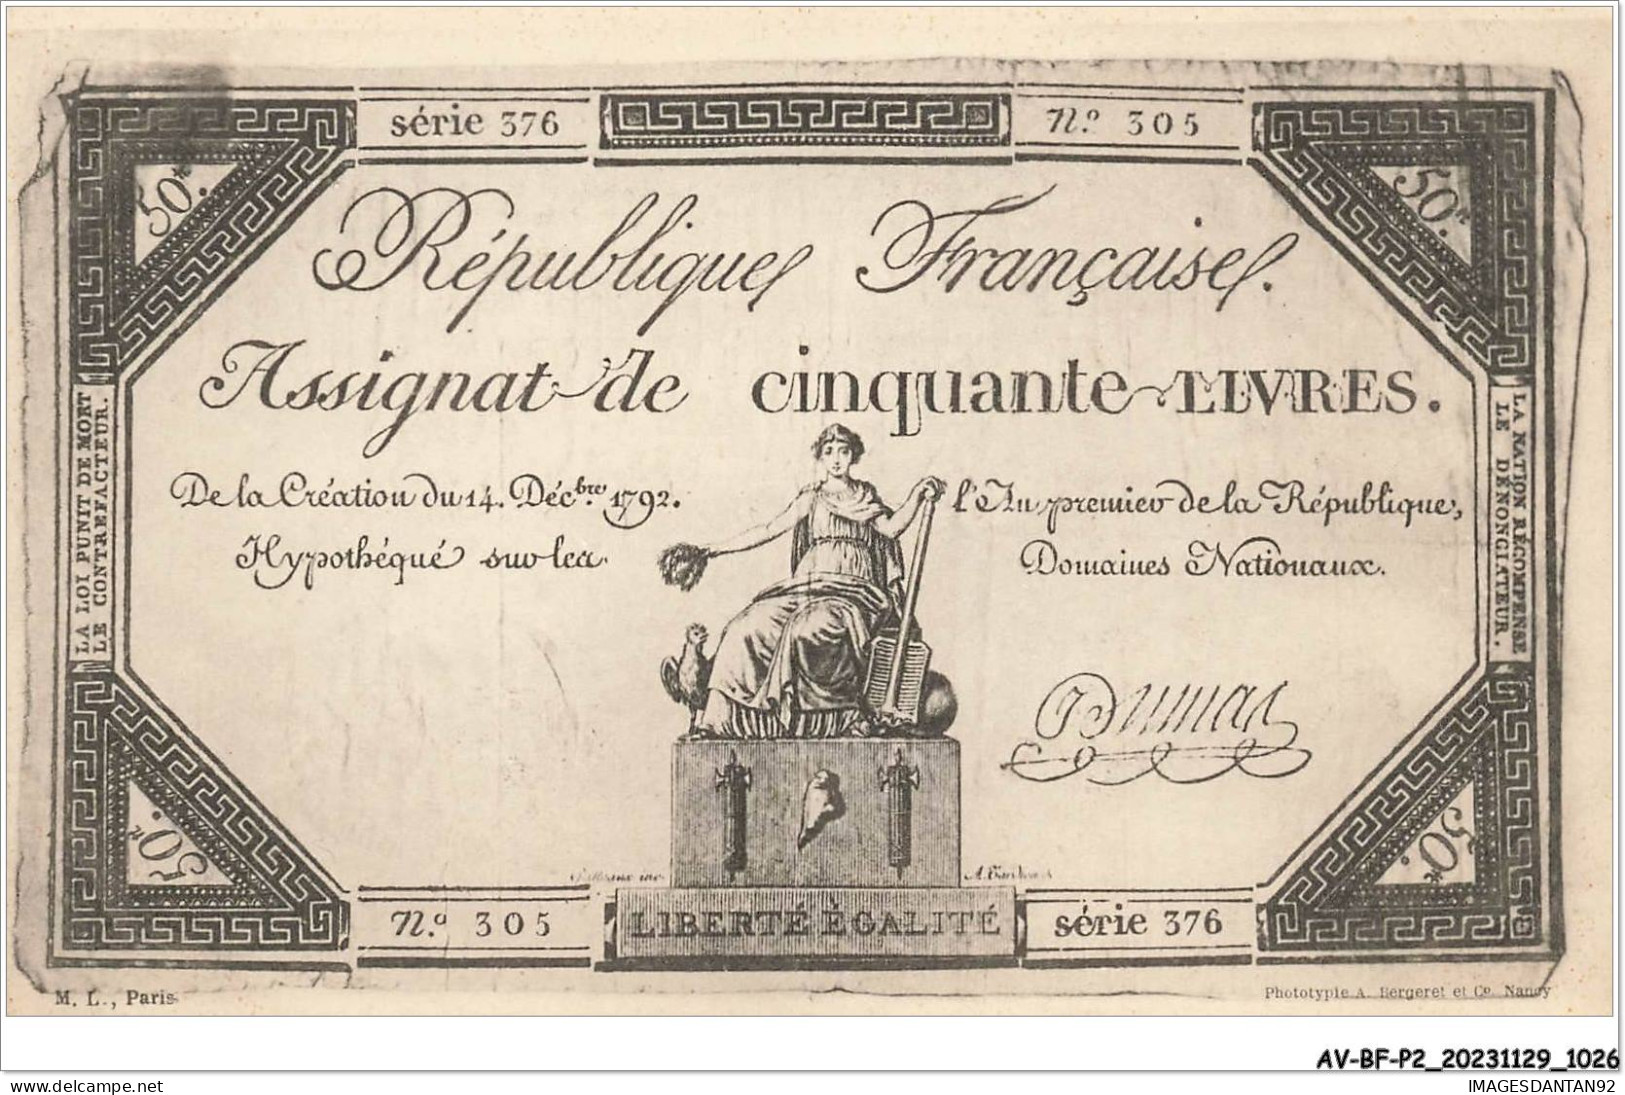 AV-BFP2-0700 - MONNAIE - Billet - République Française - Assignat De Cinquante Livres - Monedas (representaciones)